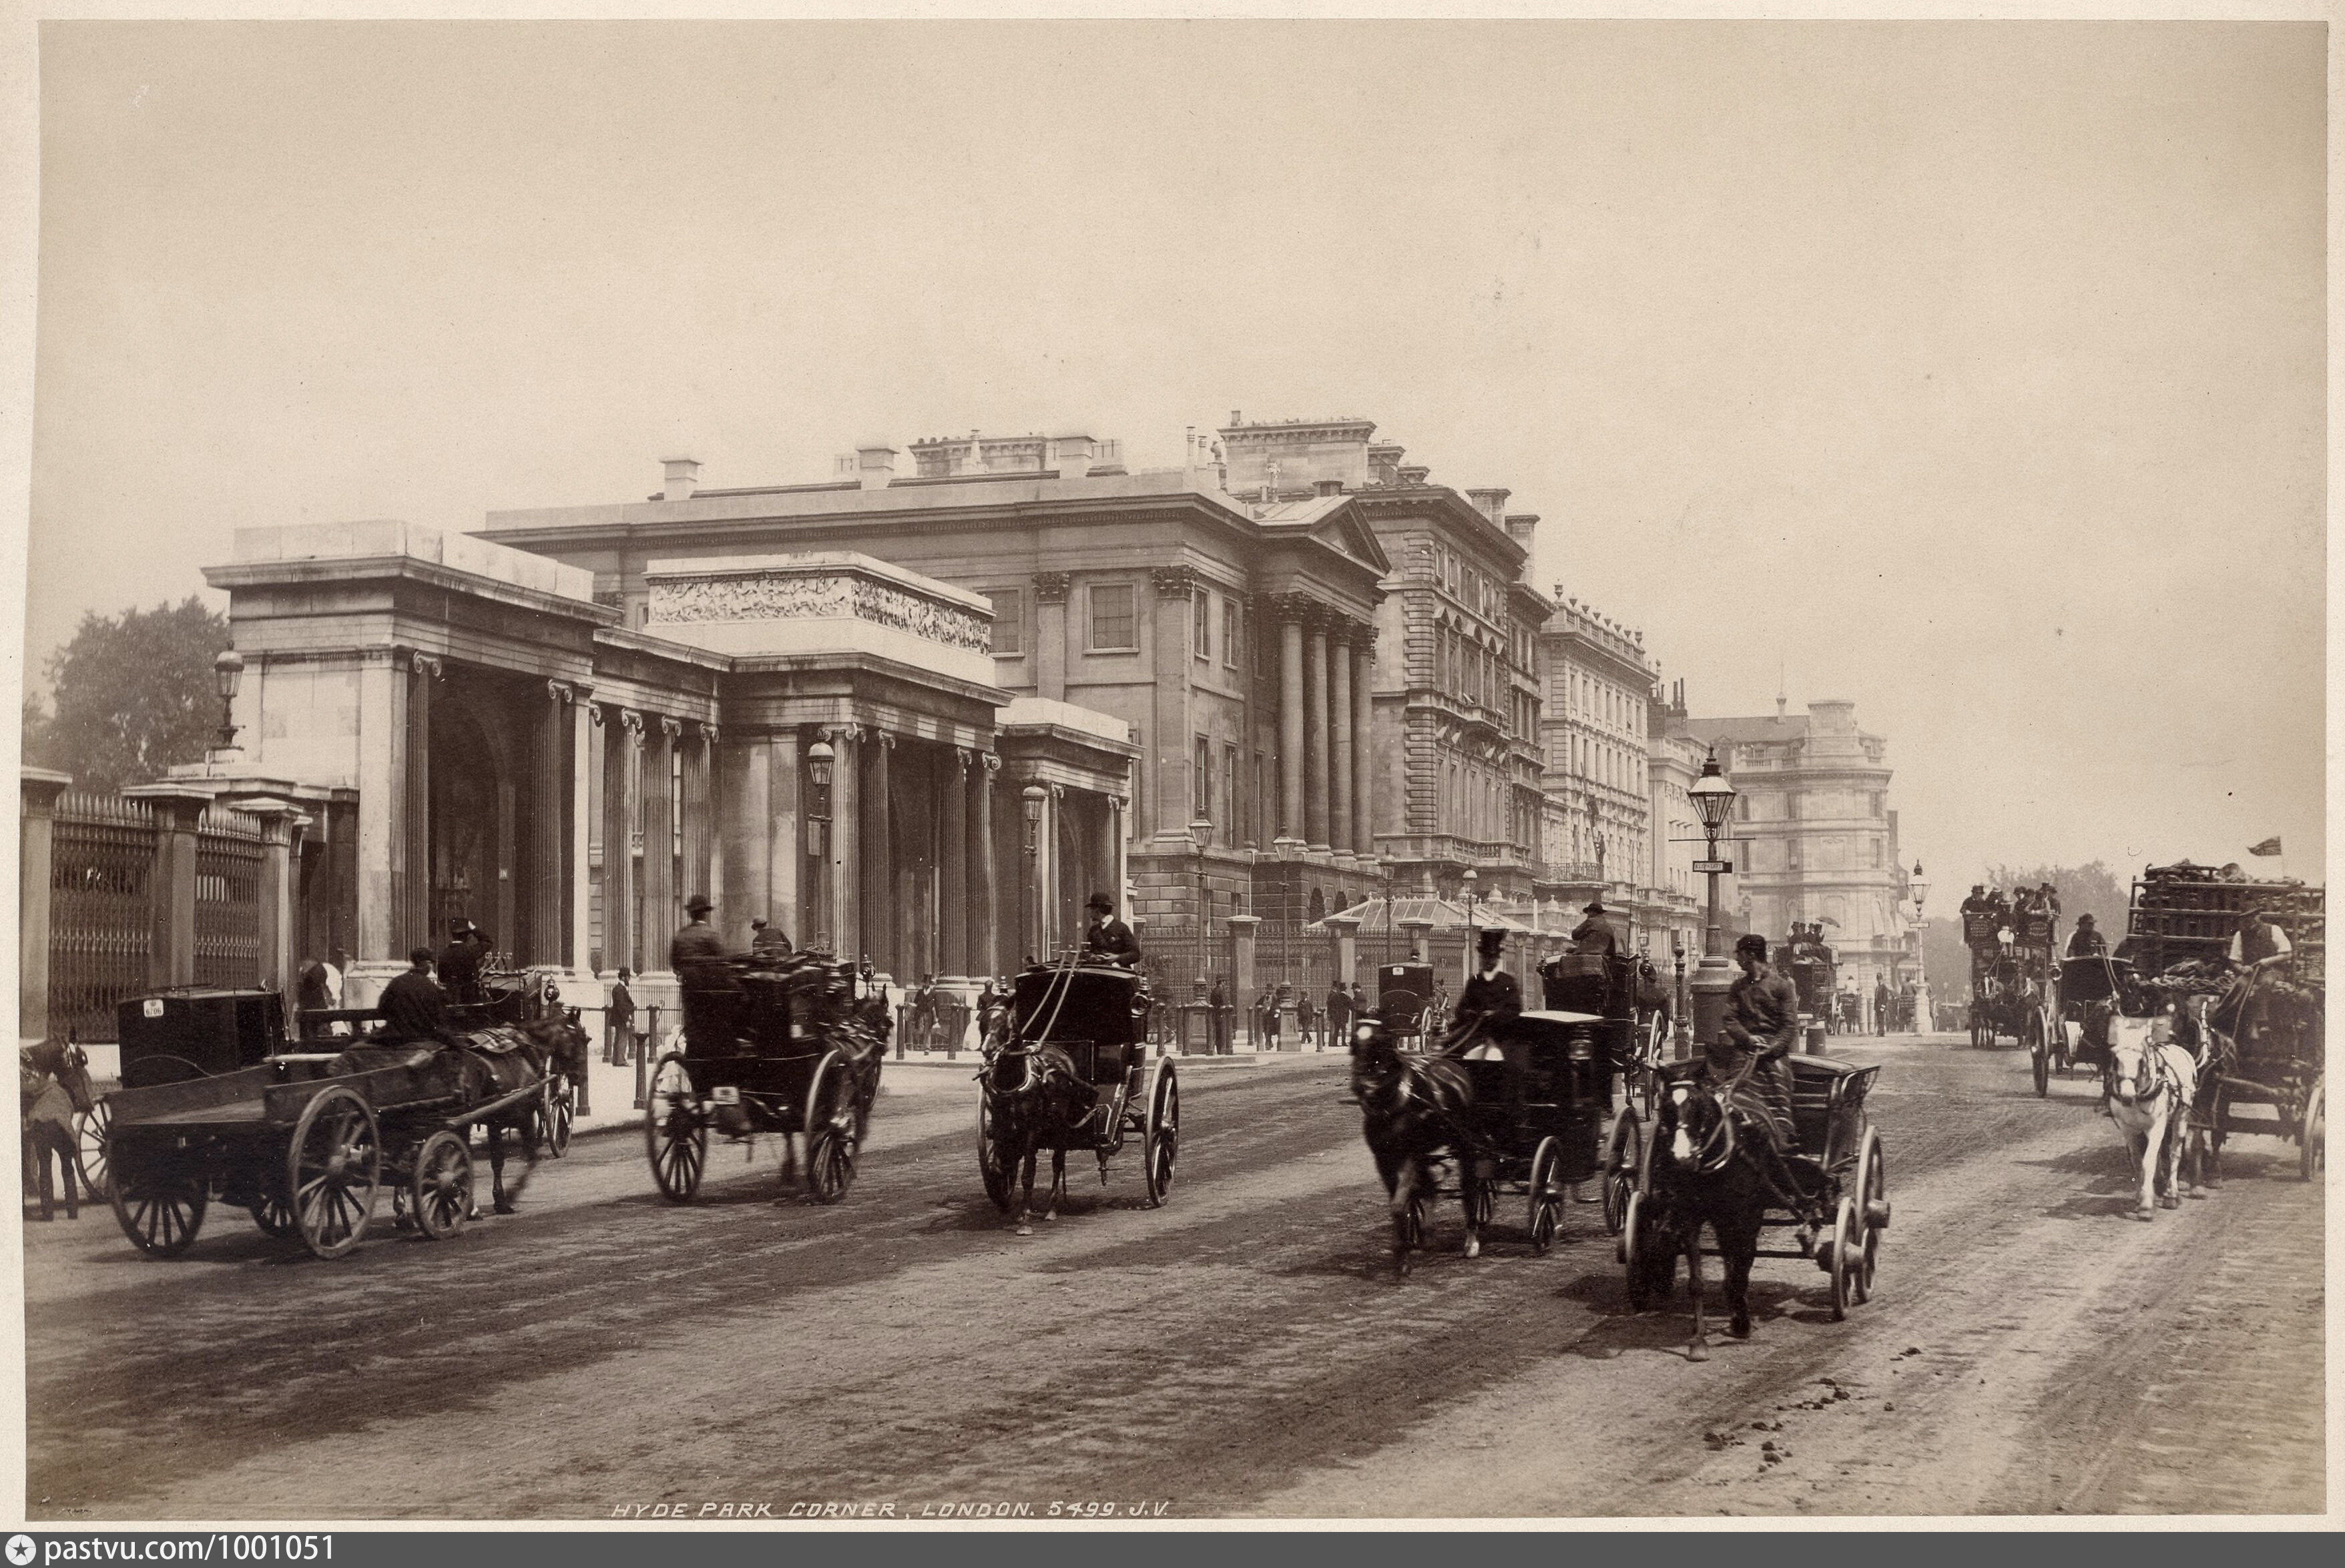 Великобритания конца 19 века. Лондон конца 19 века. Хайд парк в Лондоне 19 век. Лондон 1850. Великобритания 19-20 век.